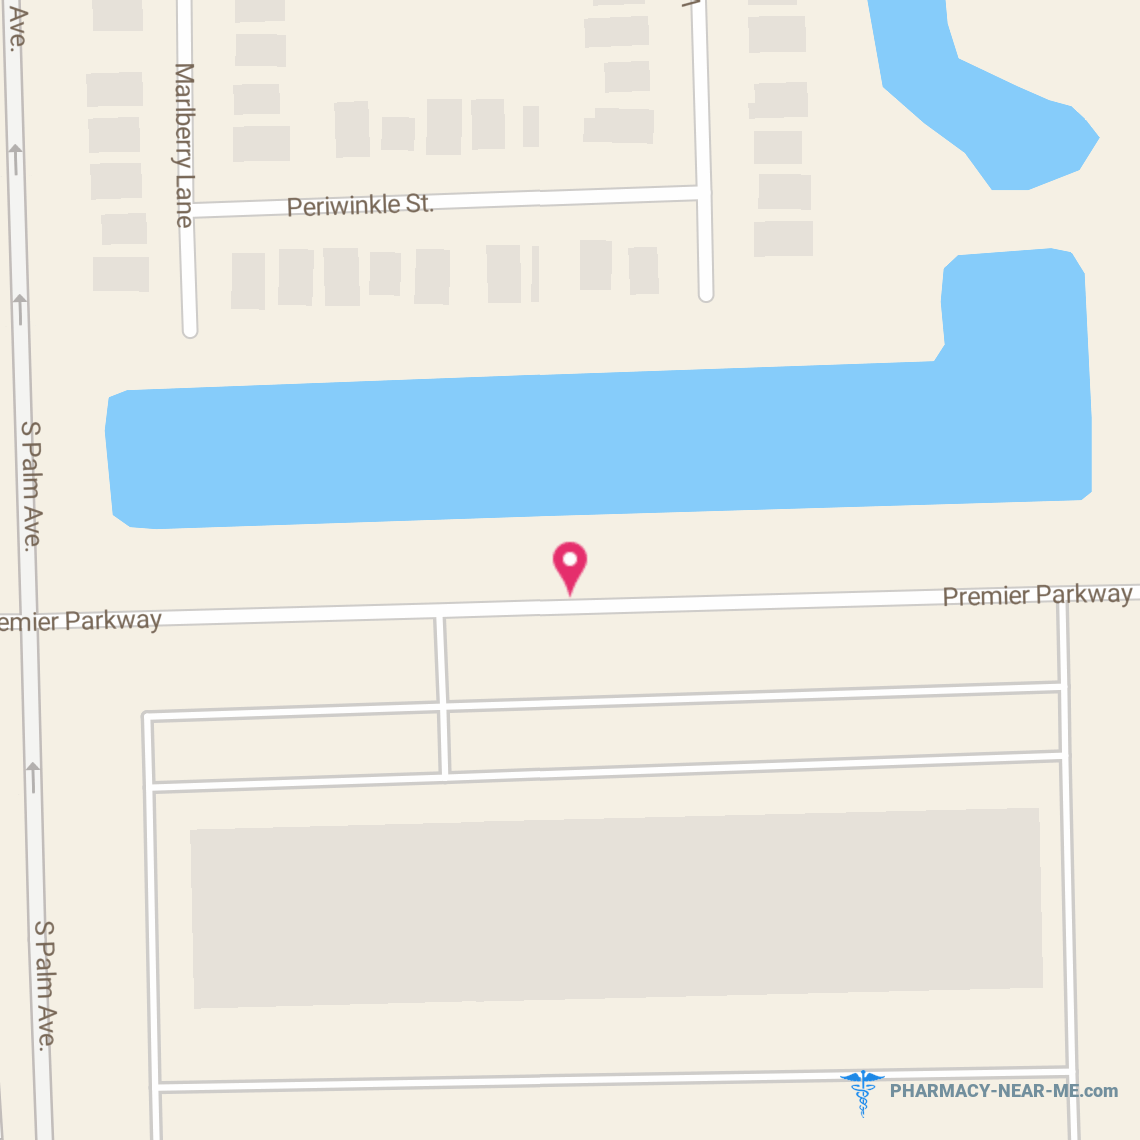 BRIOVARX OF FLORIDA - Pharmacy Hours, Phone, Reviews & Information: 9994 Premier Parkway, Miramar, Florida 33025, United States